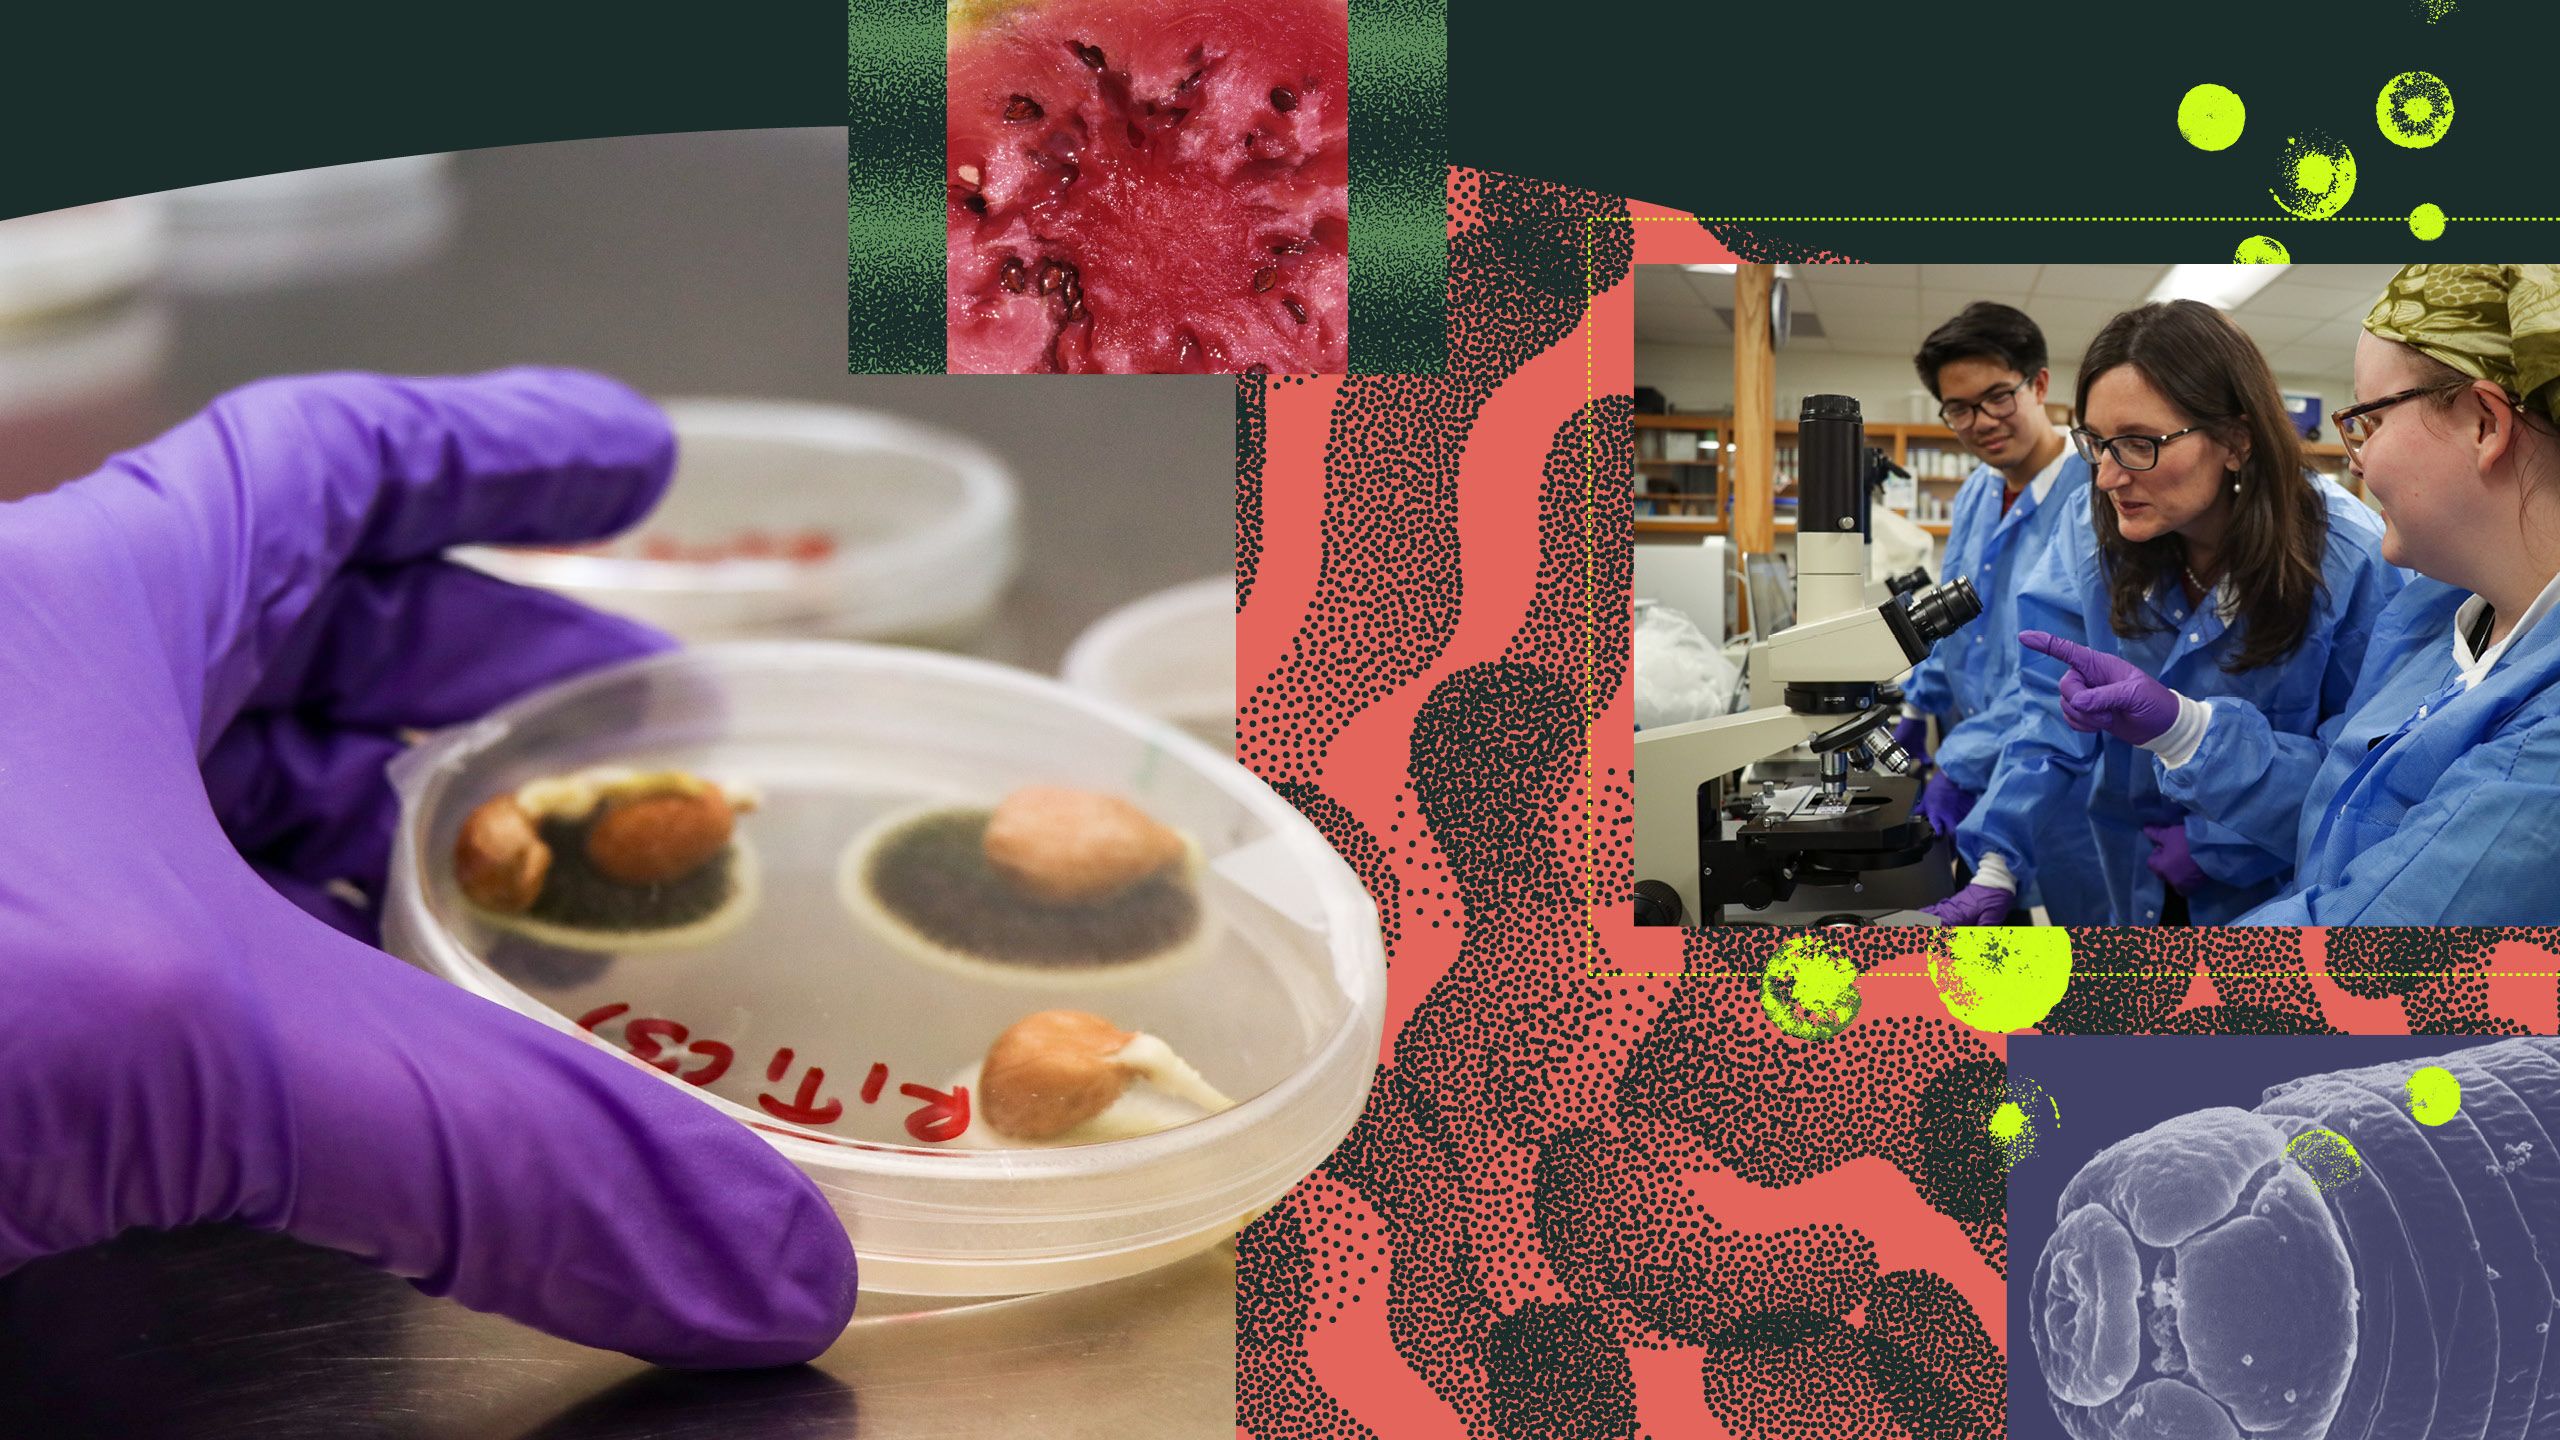 Petri dishes don't make good hosts for parasitic nematodes